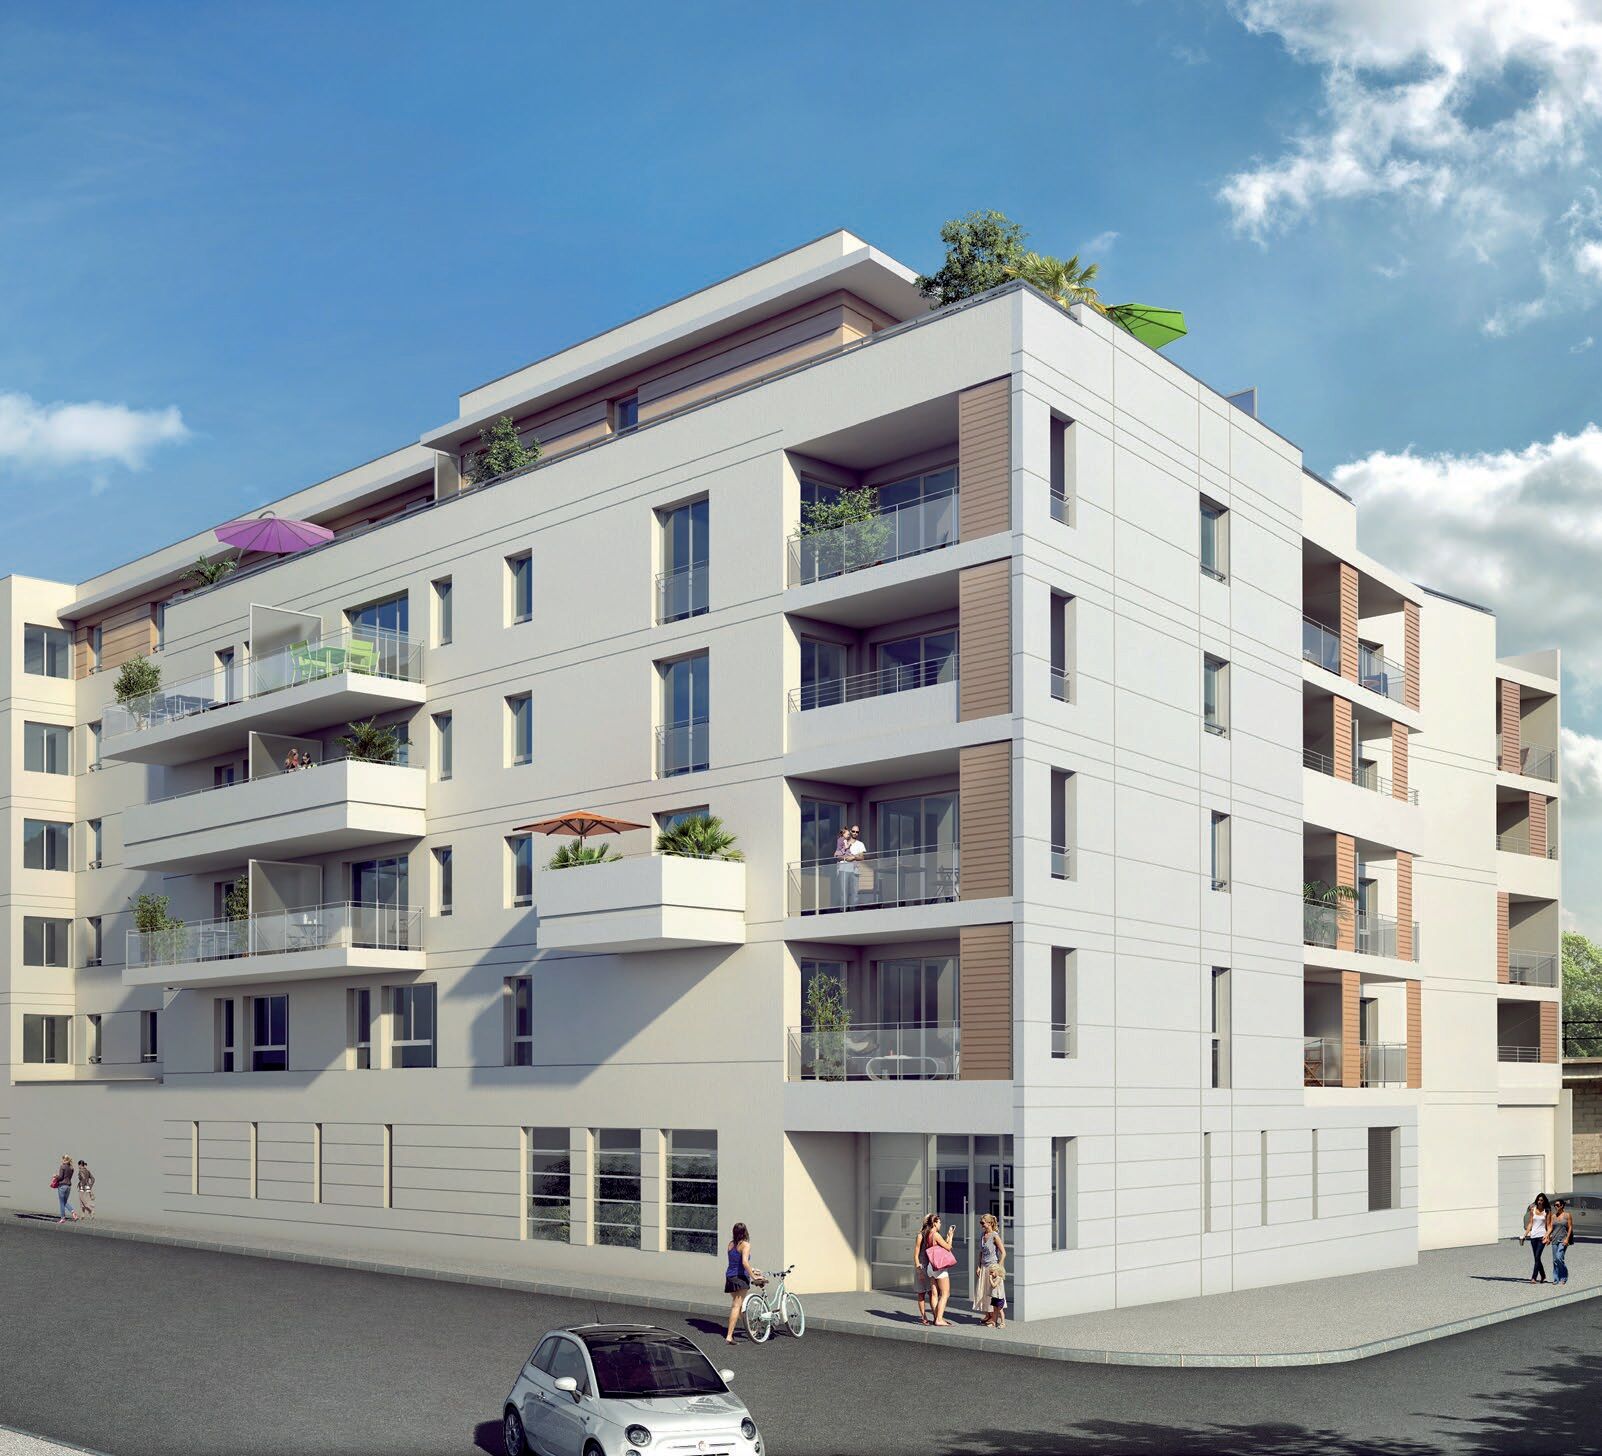 Vente Appartement neuf 83 m² à Avignon 281 000 ¤